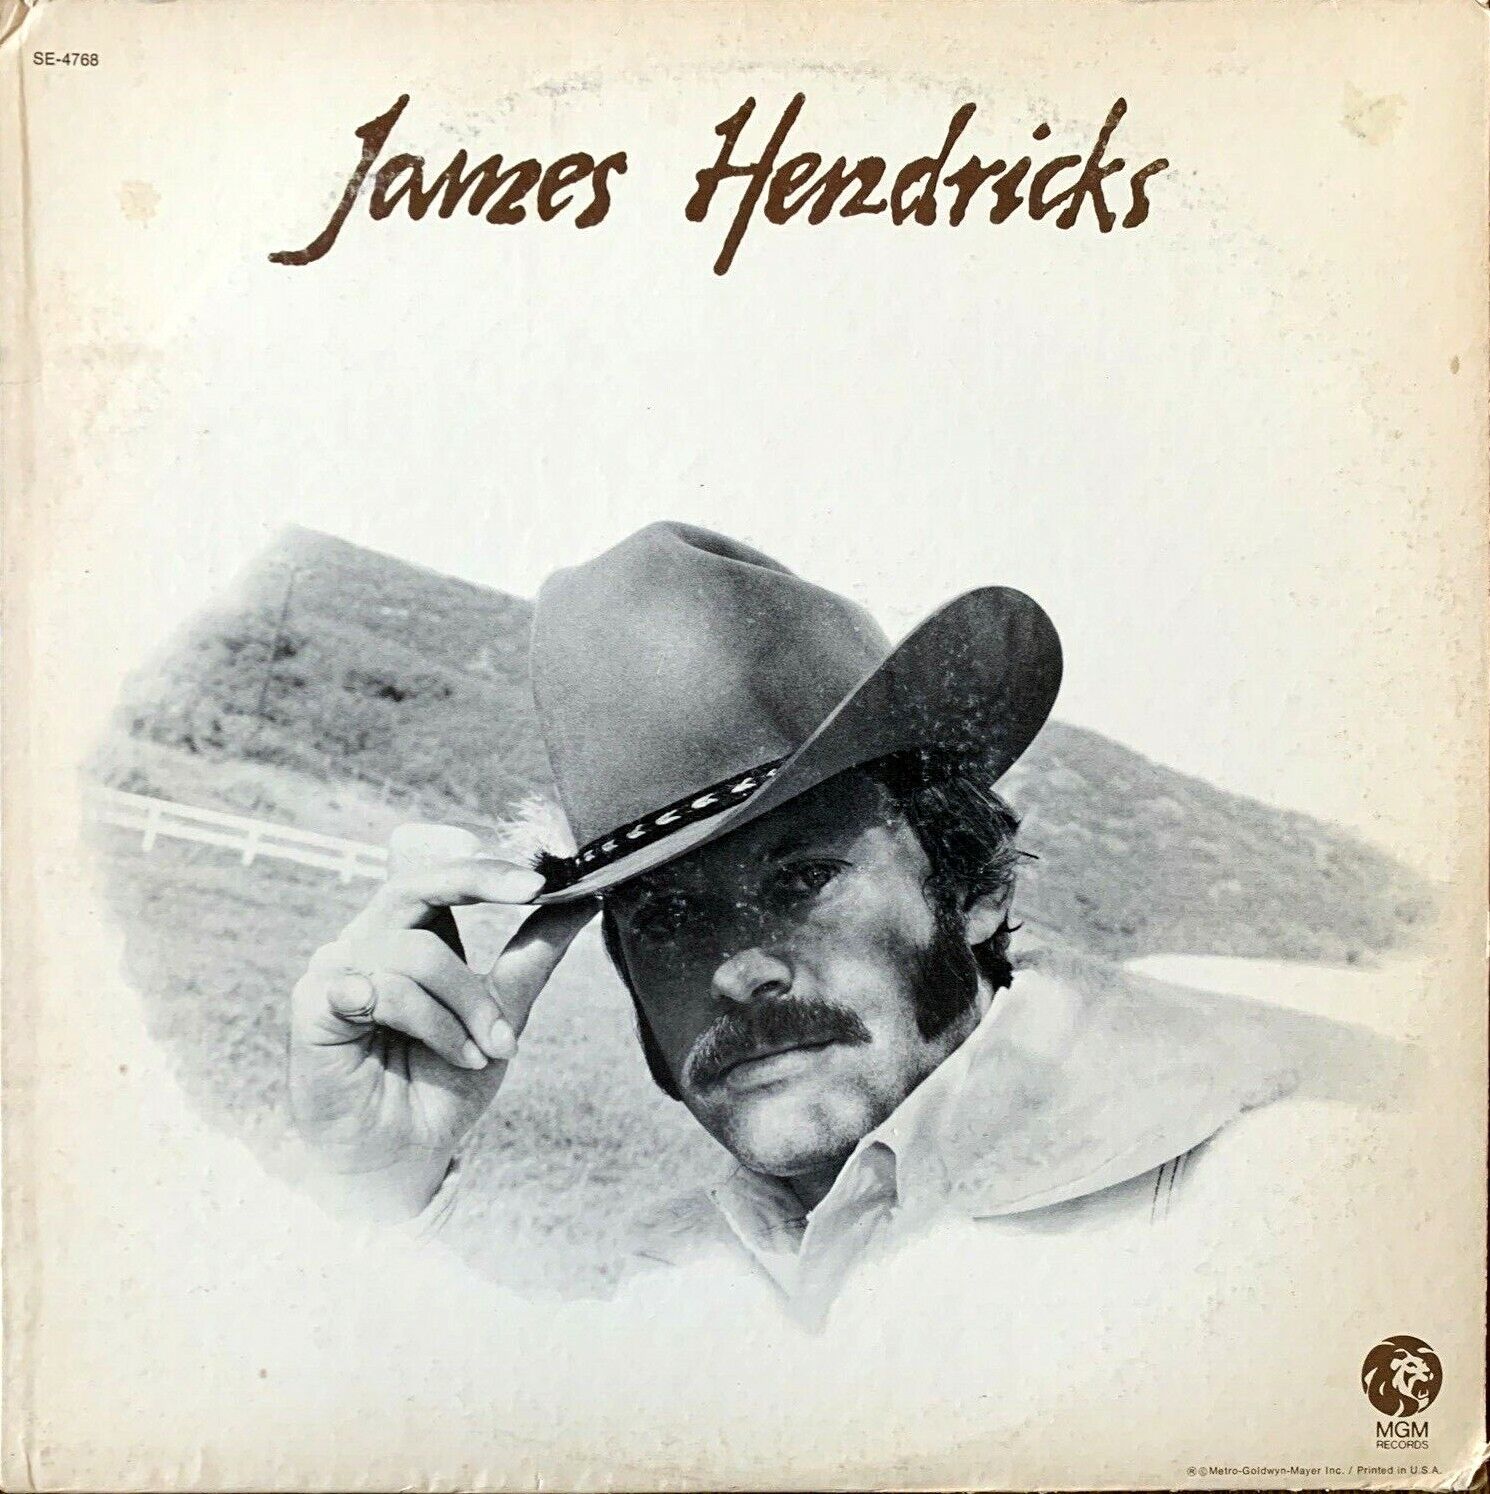 James Hendricks - James Hendricks Self-titled 33 RPM Vinyl LP Record PROMO VG+